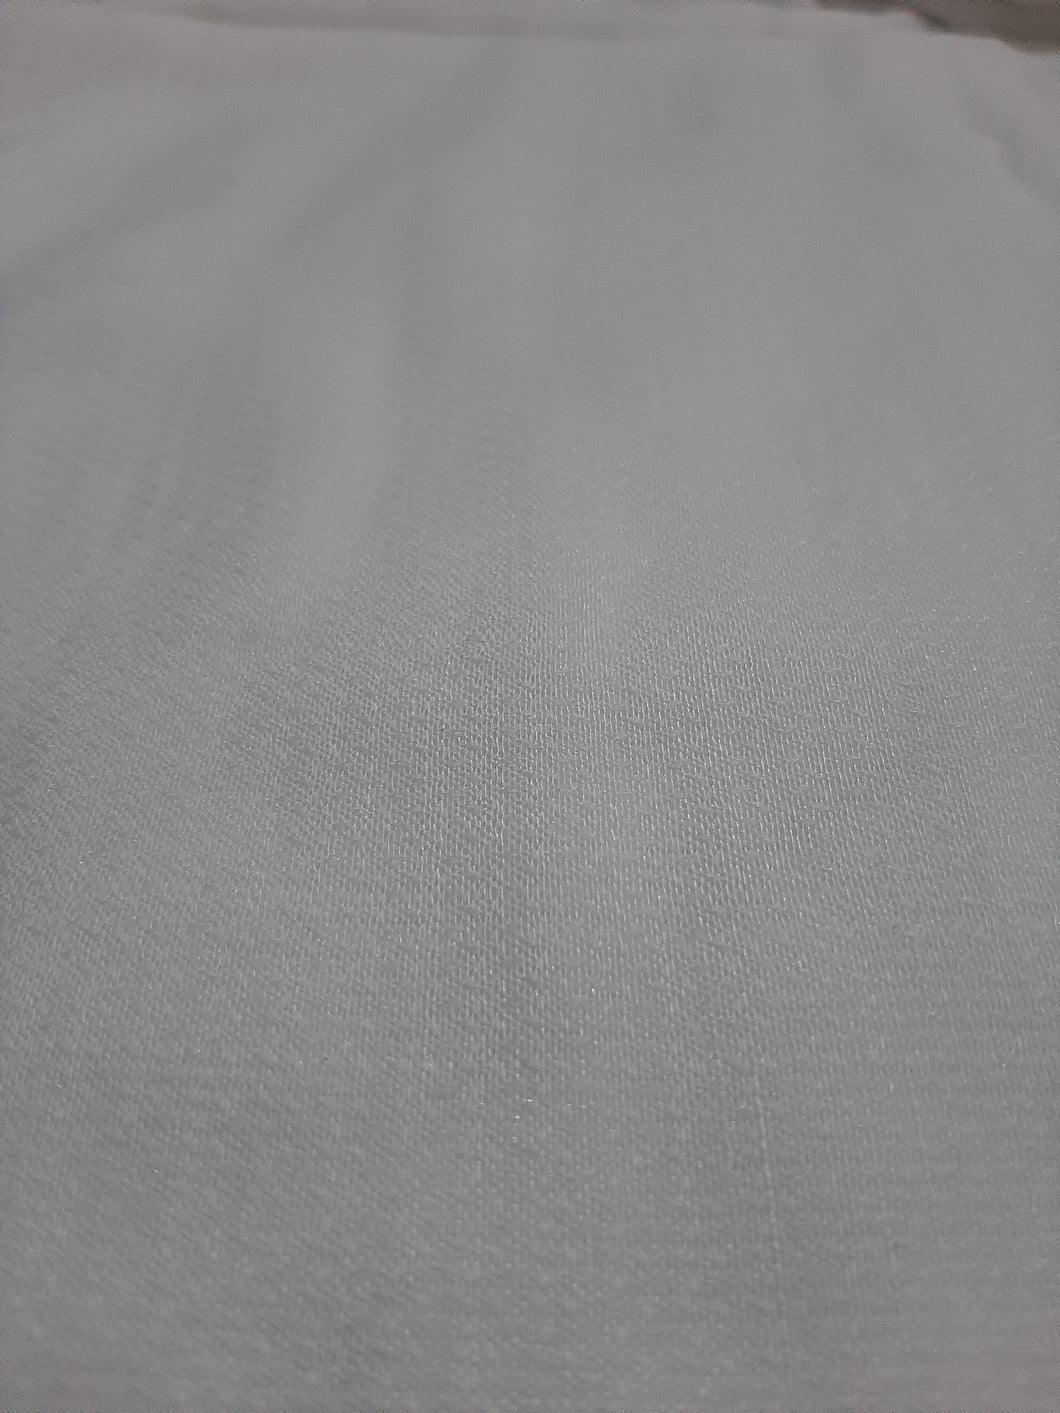 Branded Cotton Net Fabric